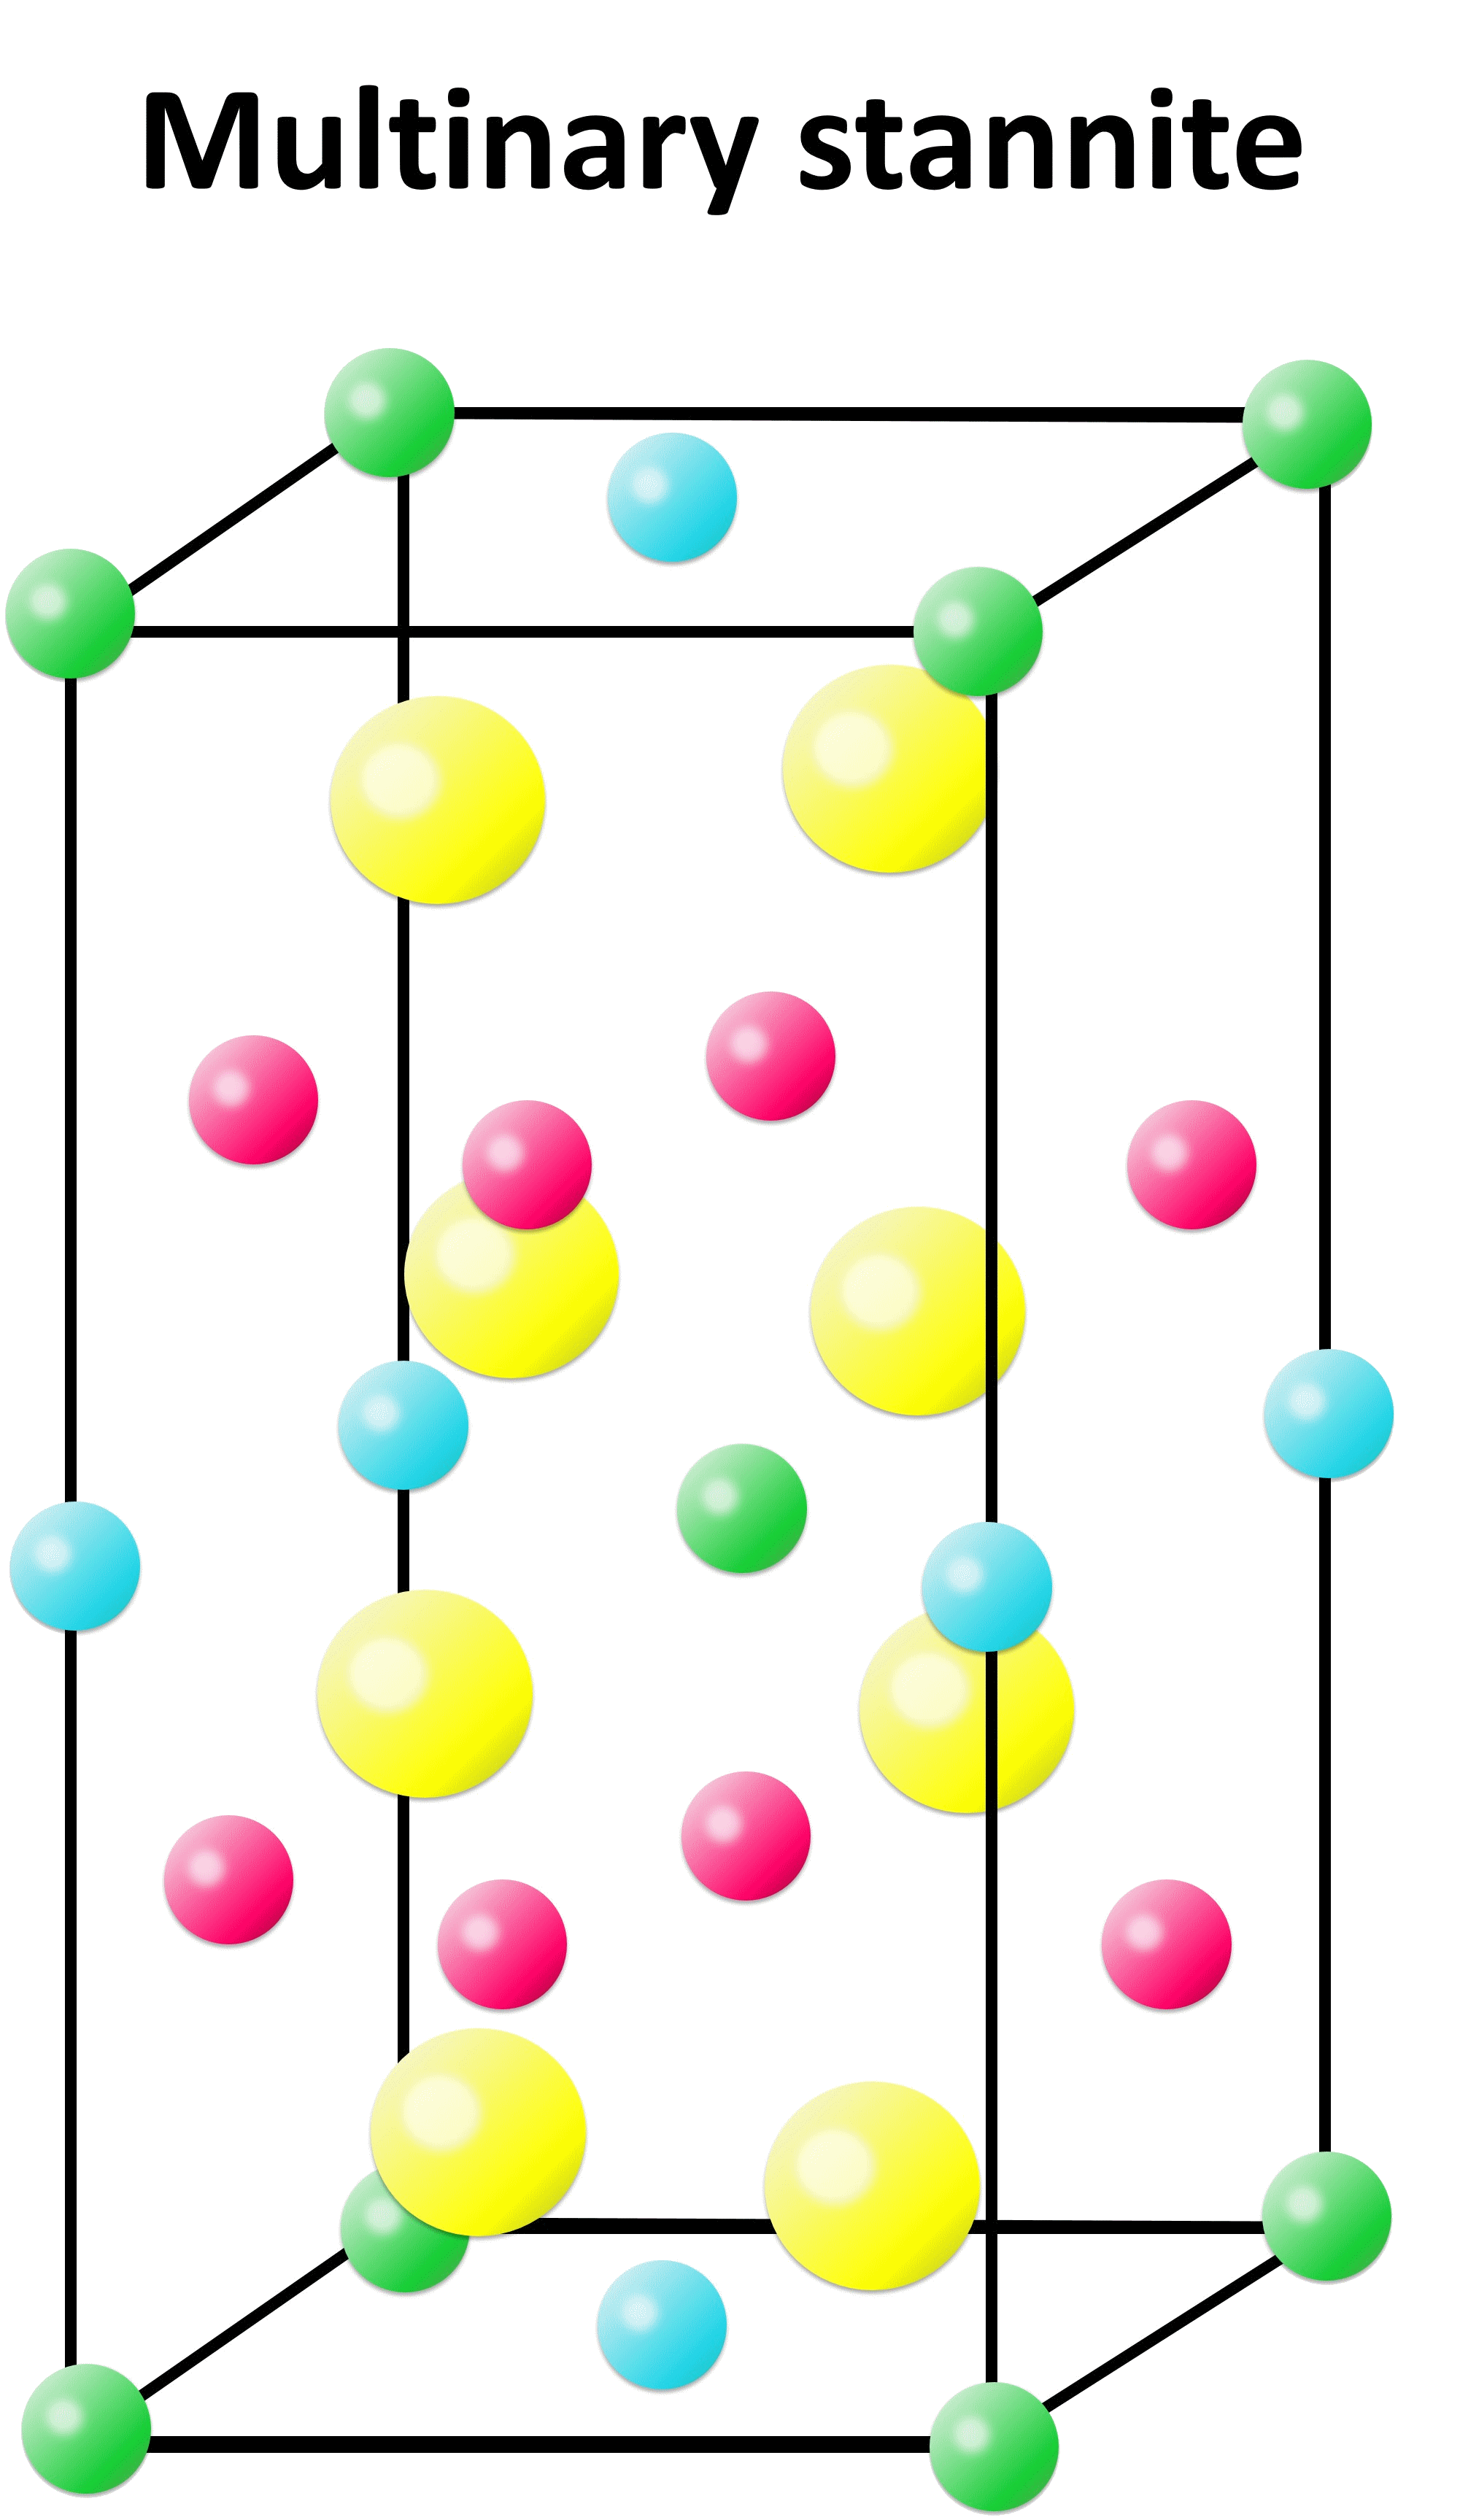 Logo for perovskite and stannite multinary materials